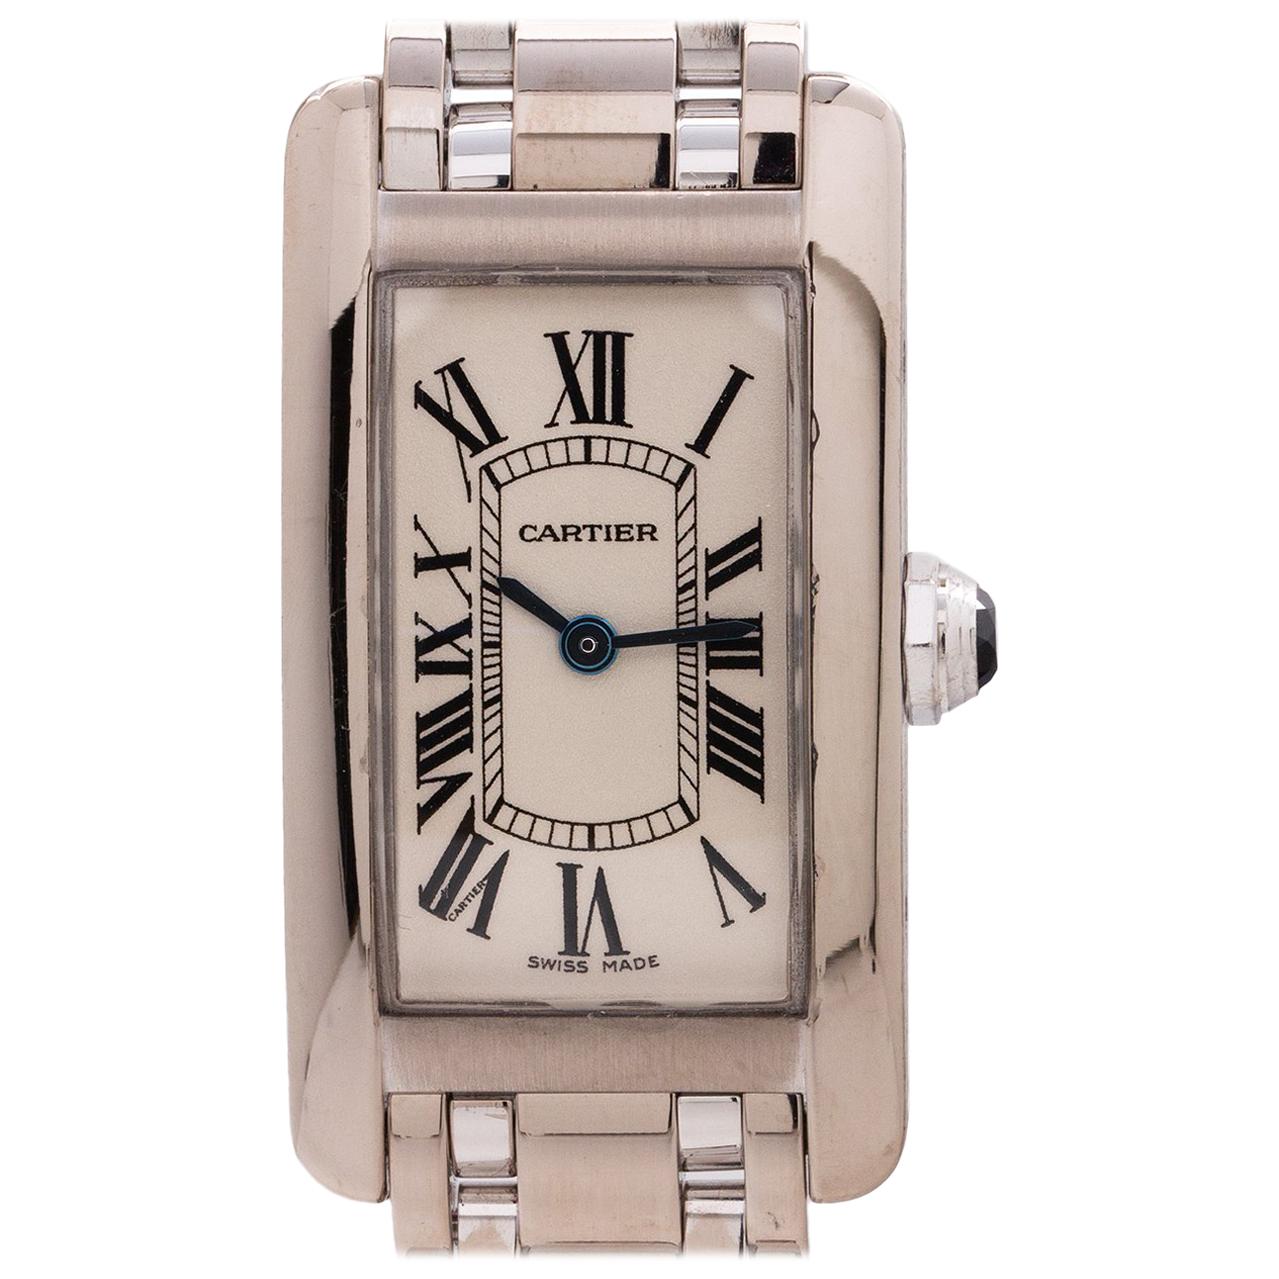 Cartier Ladies White Gold Tank American quartz Wristwatch, circa 1990s